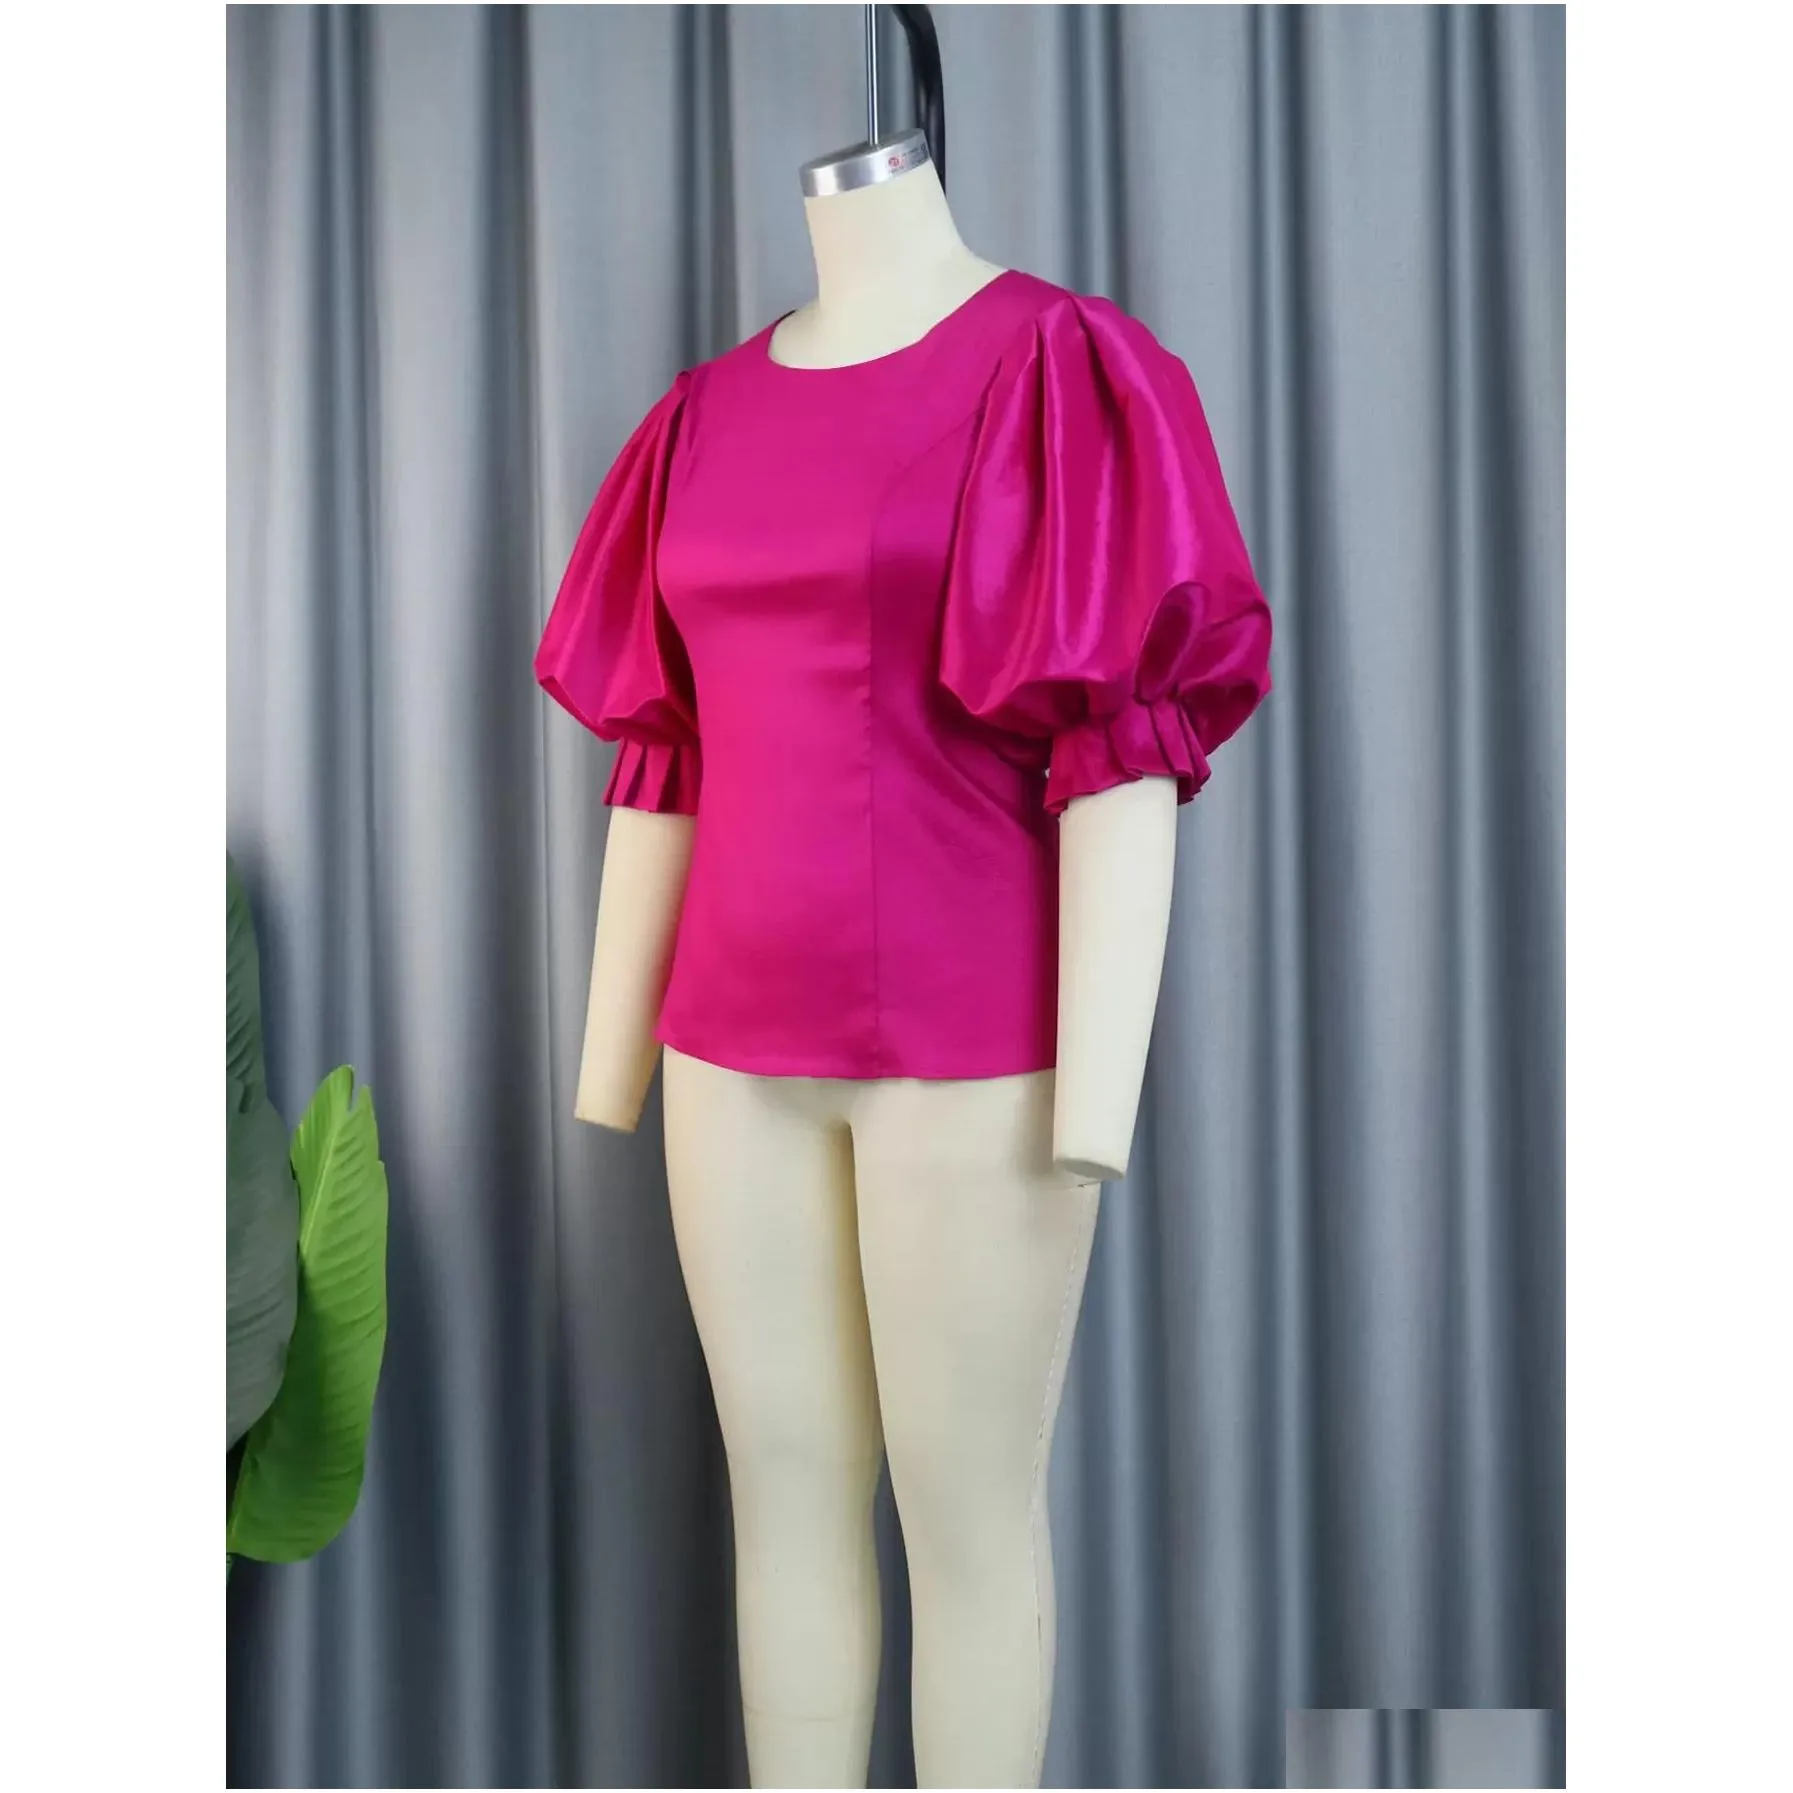 plus Size Cute Pink Blouse Tops for Women Summer Shiny Ruffles Lantern Sleeve Sweet Shirt Elegant Office Wear Trendy Clothes Y7HE#